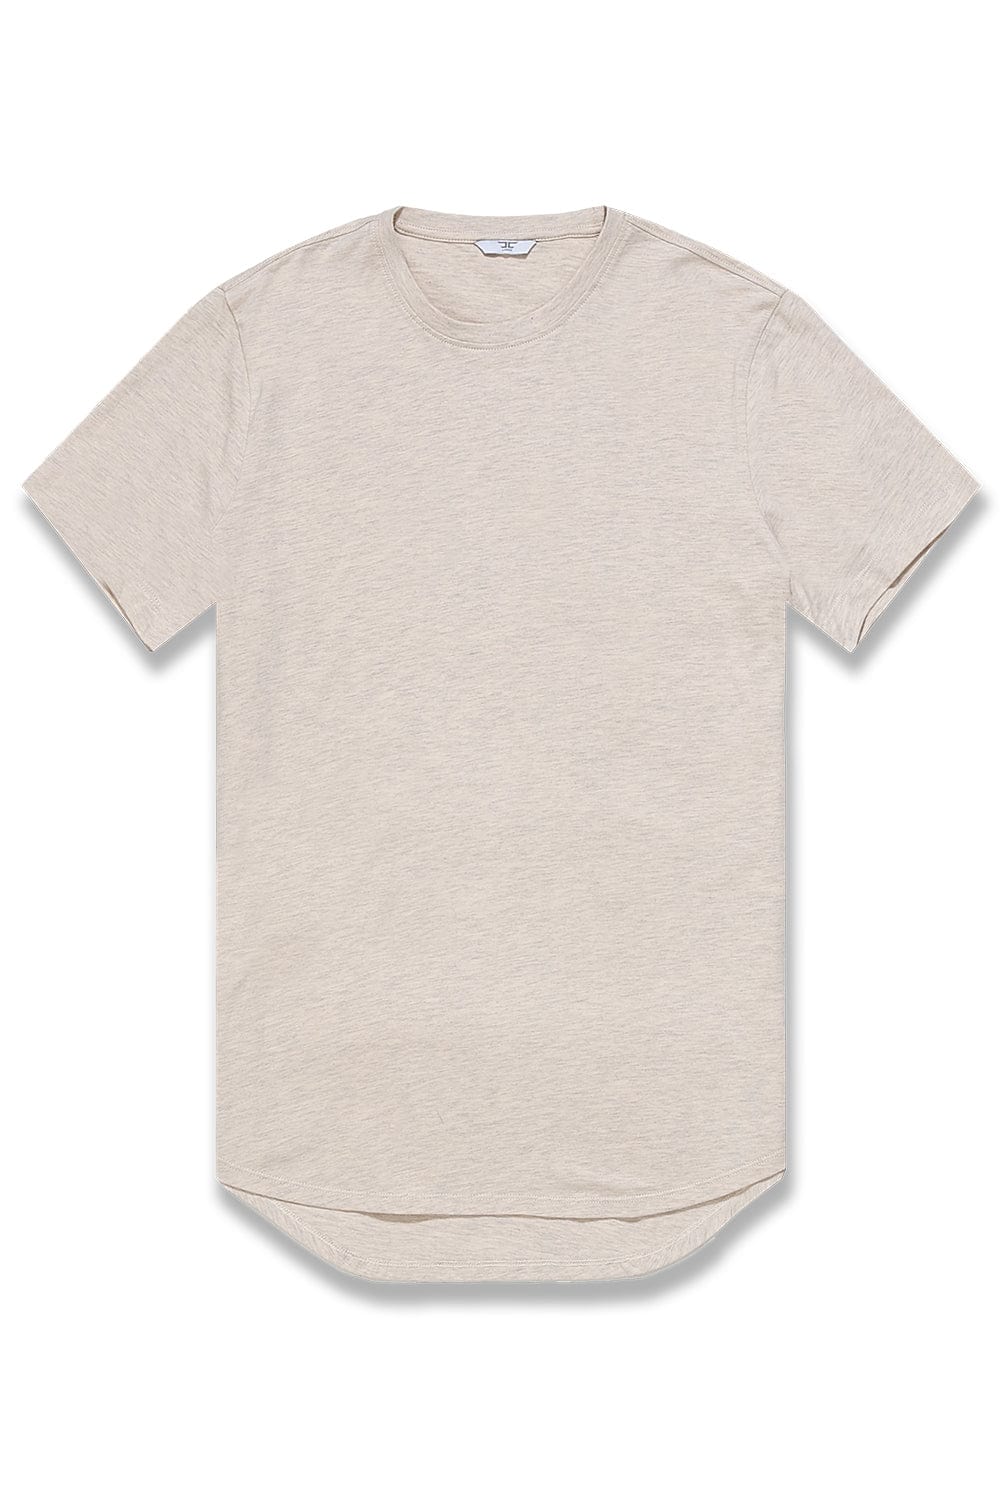 Jordan Craig Scallop T-Shirt (Athletic Fit) Gunpowder / S